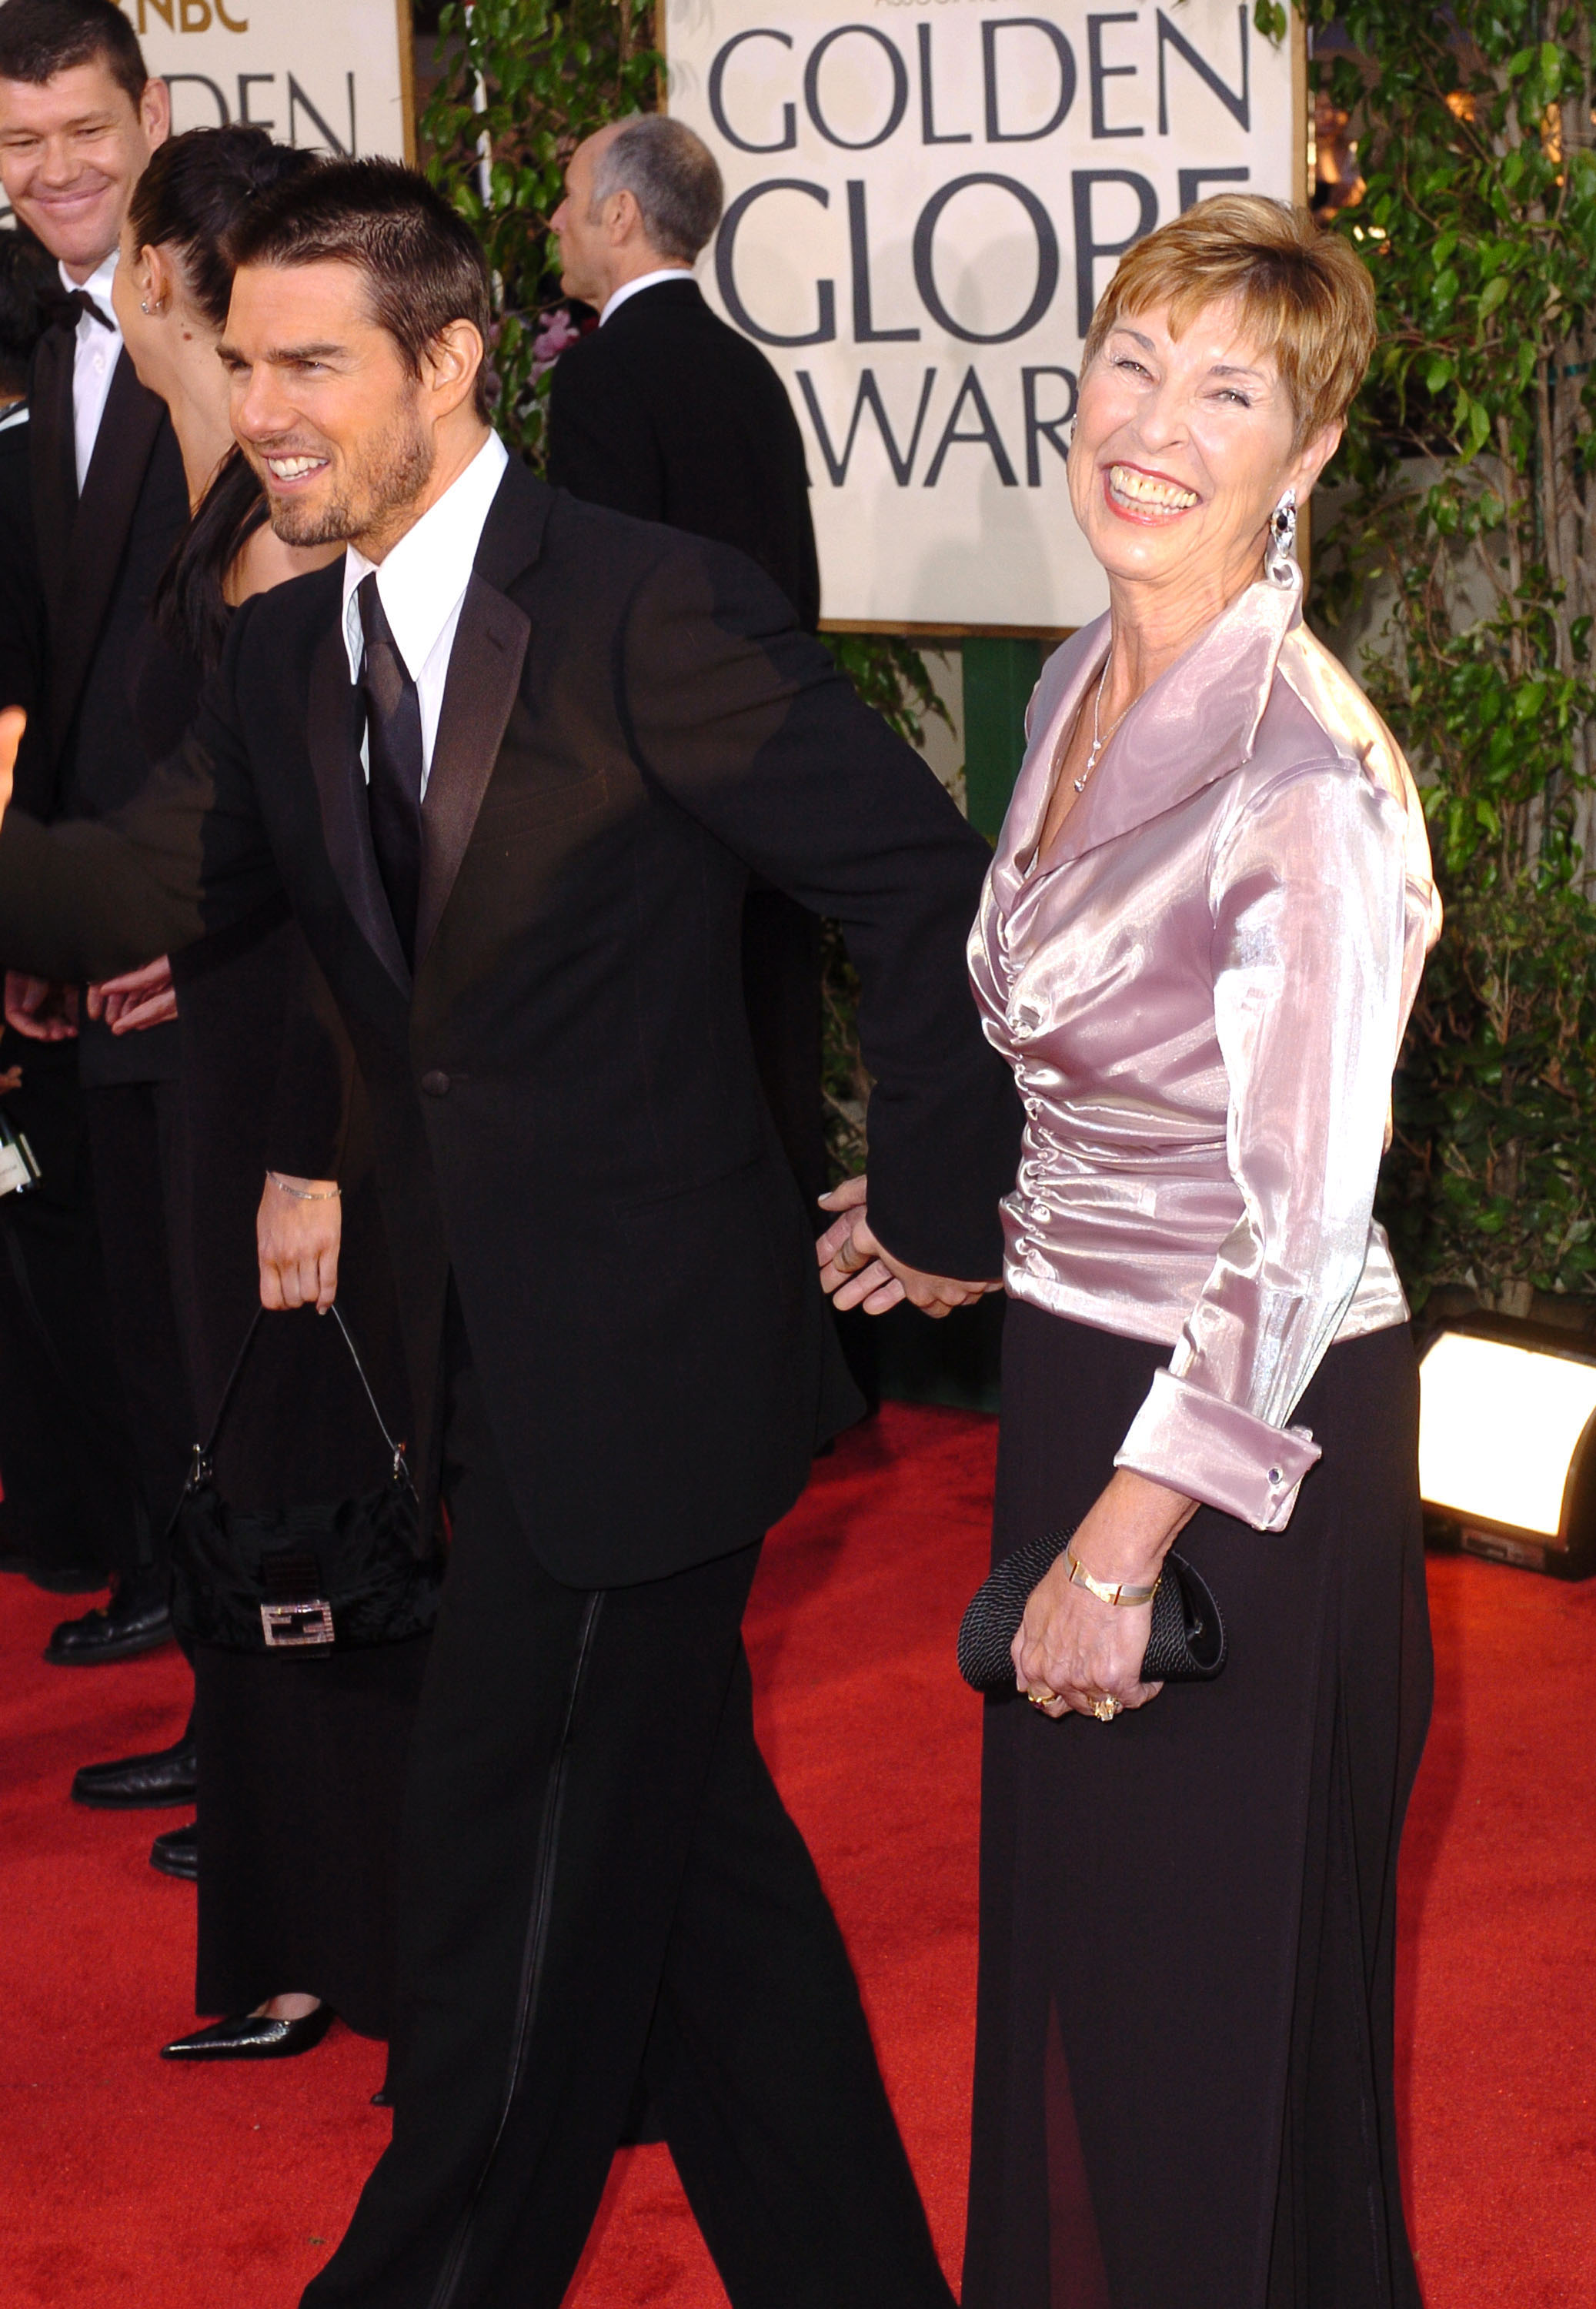 Tom Cruise und Mary Lee Pfeiffer bei der 61. Annual Golden Globe Awards in Beverly Hills, 2004 | Quelle: Getty Images